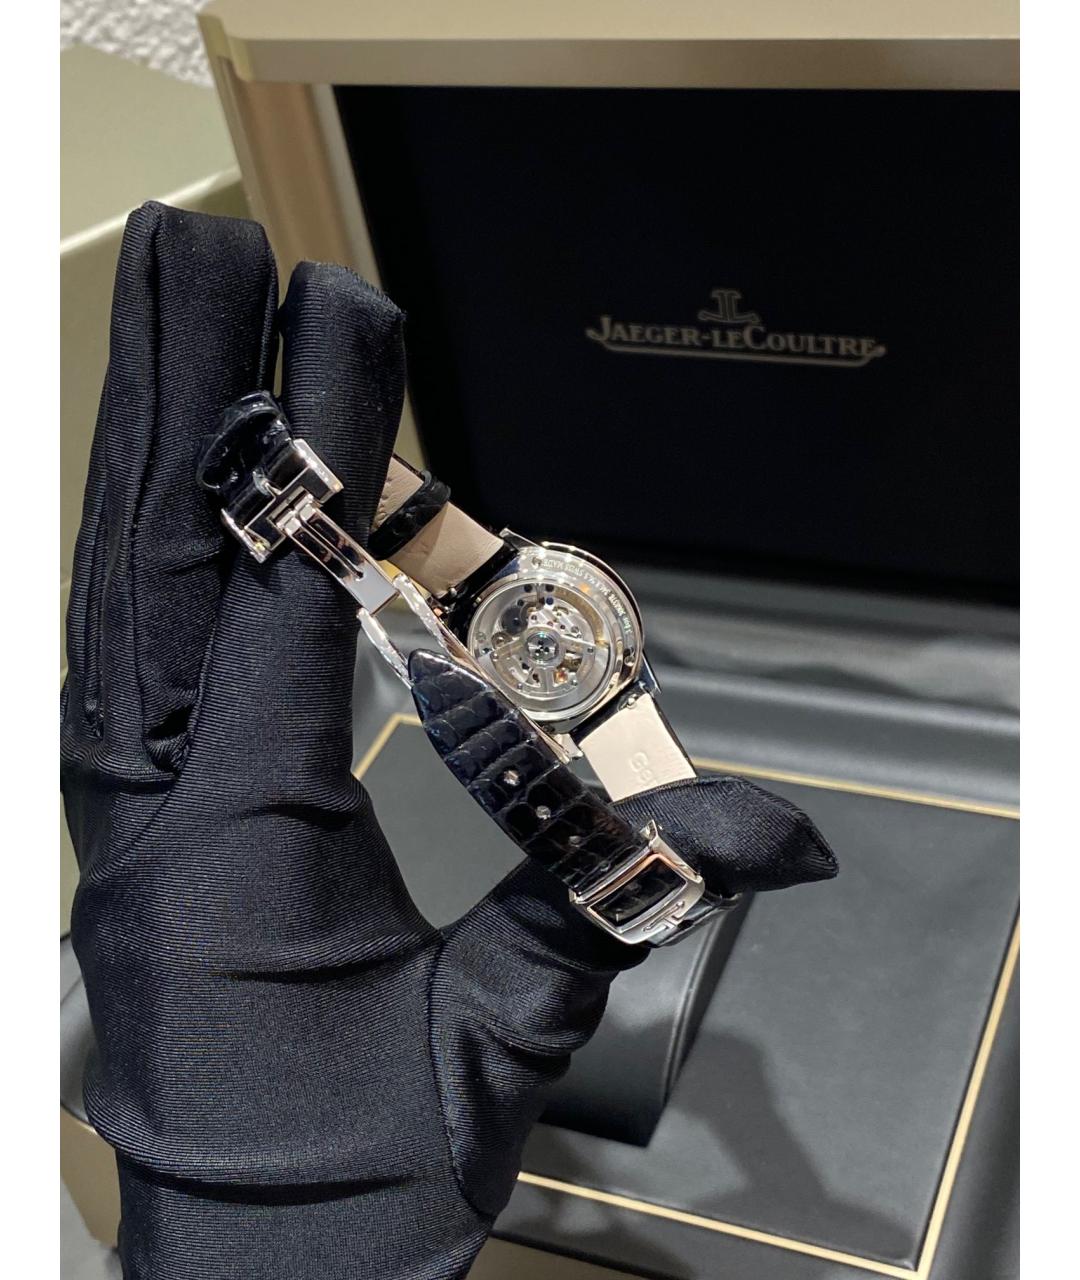 Jaeger LeCoultre Белые металлические часы, фото 4